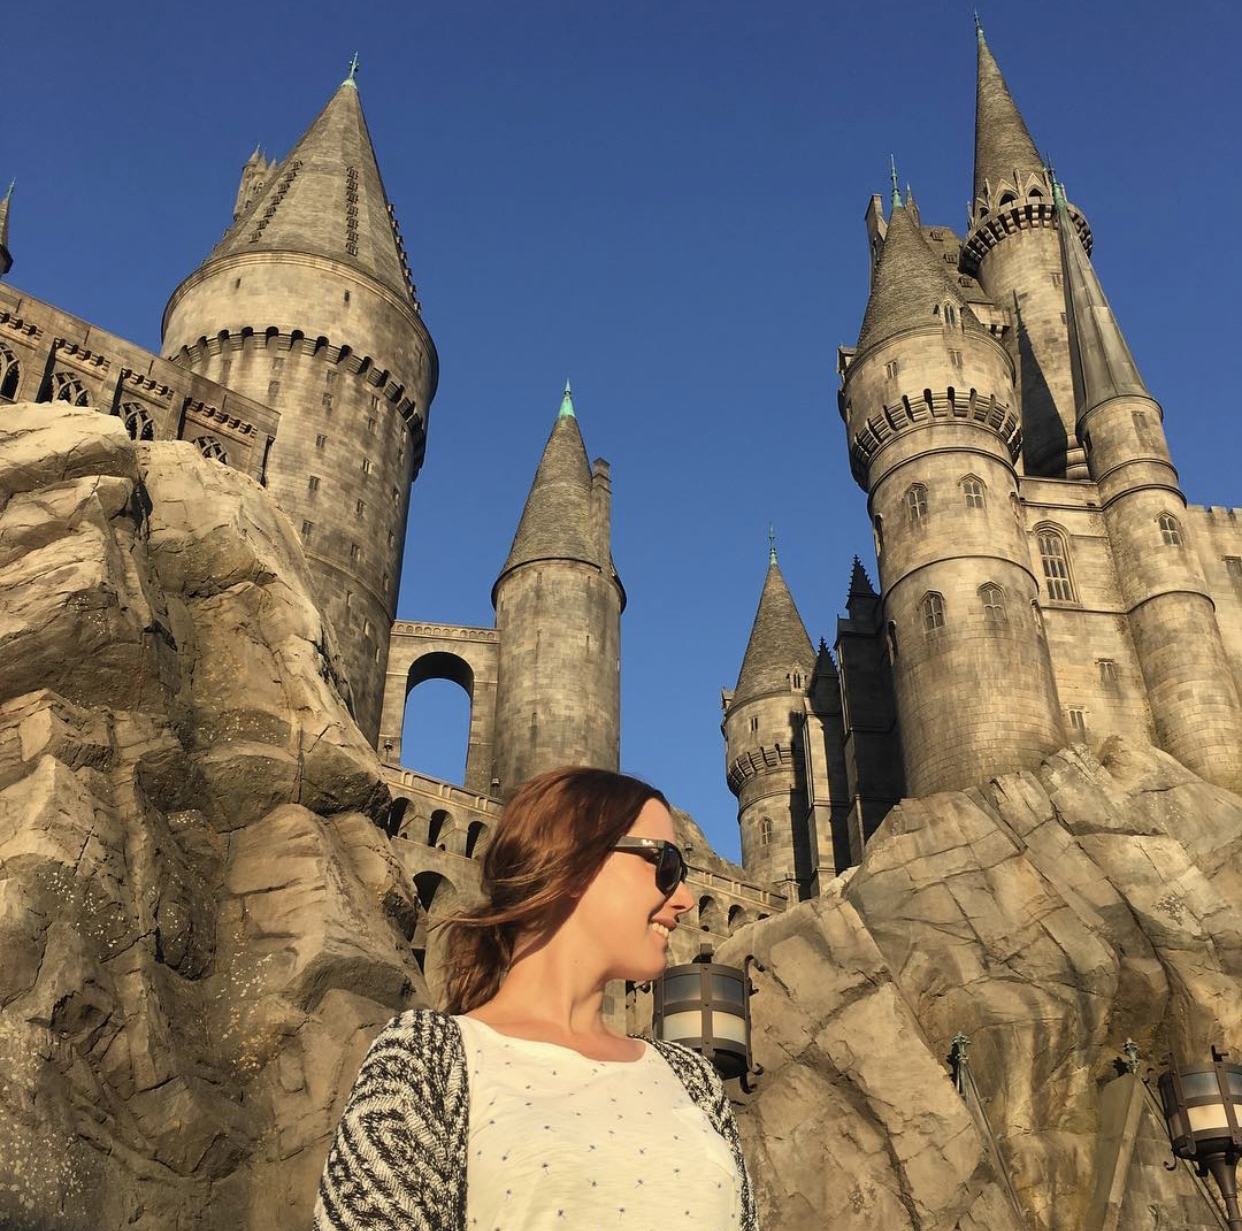 Harry Potter locations